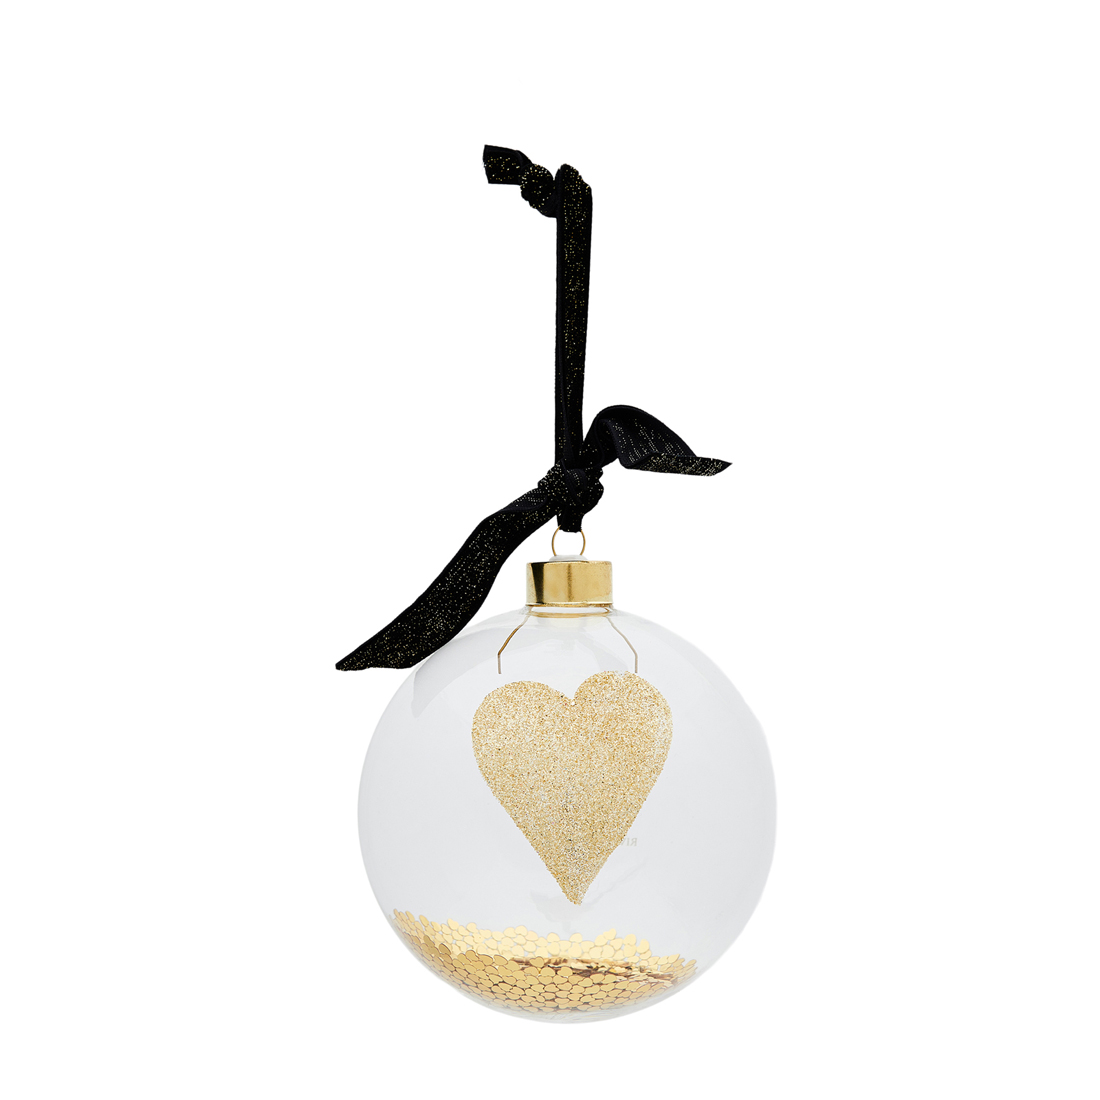 Riviera Maison Kerstbal Goud - Love This Season Ornament - Ø12cm